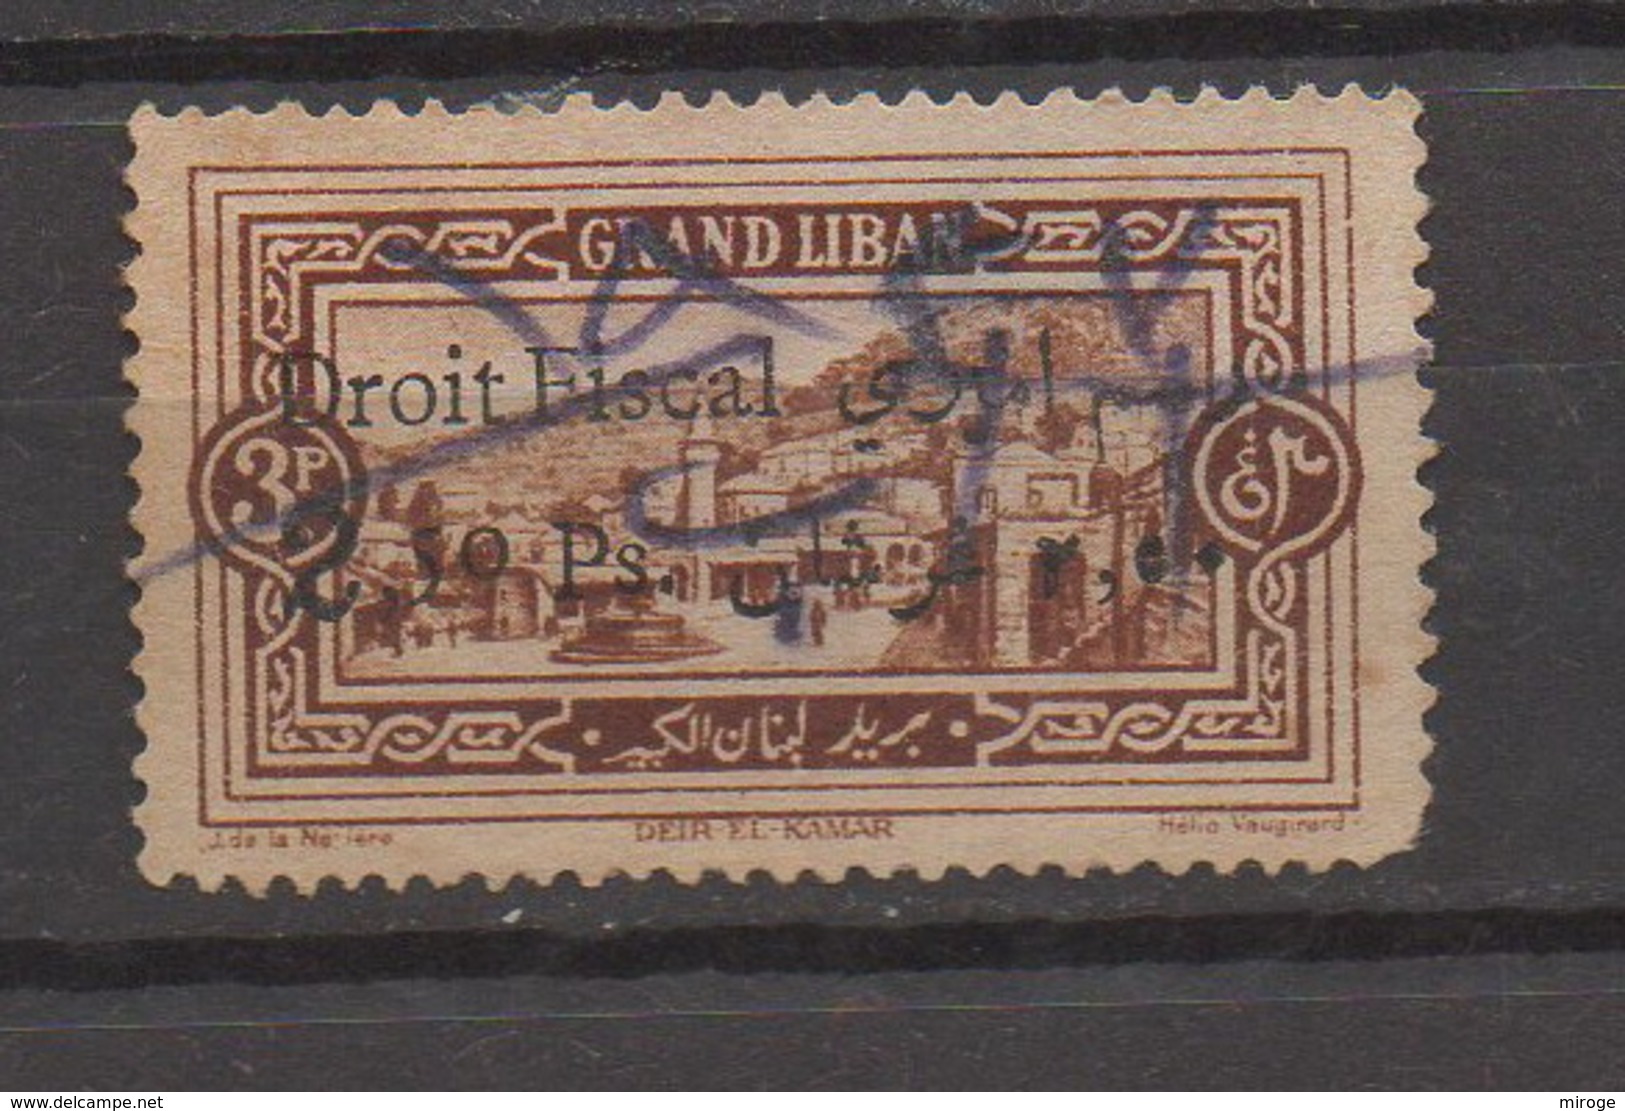 Grand Liban 1925 Overprint Droit Fiscal 2.50p On 3p Used Stamp Revenue Lebanon , Liban Libano - Lebanon